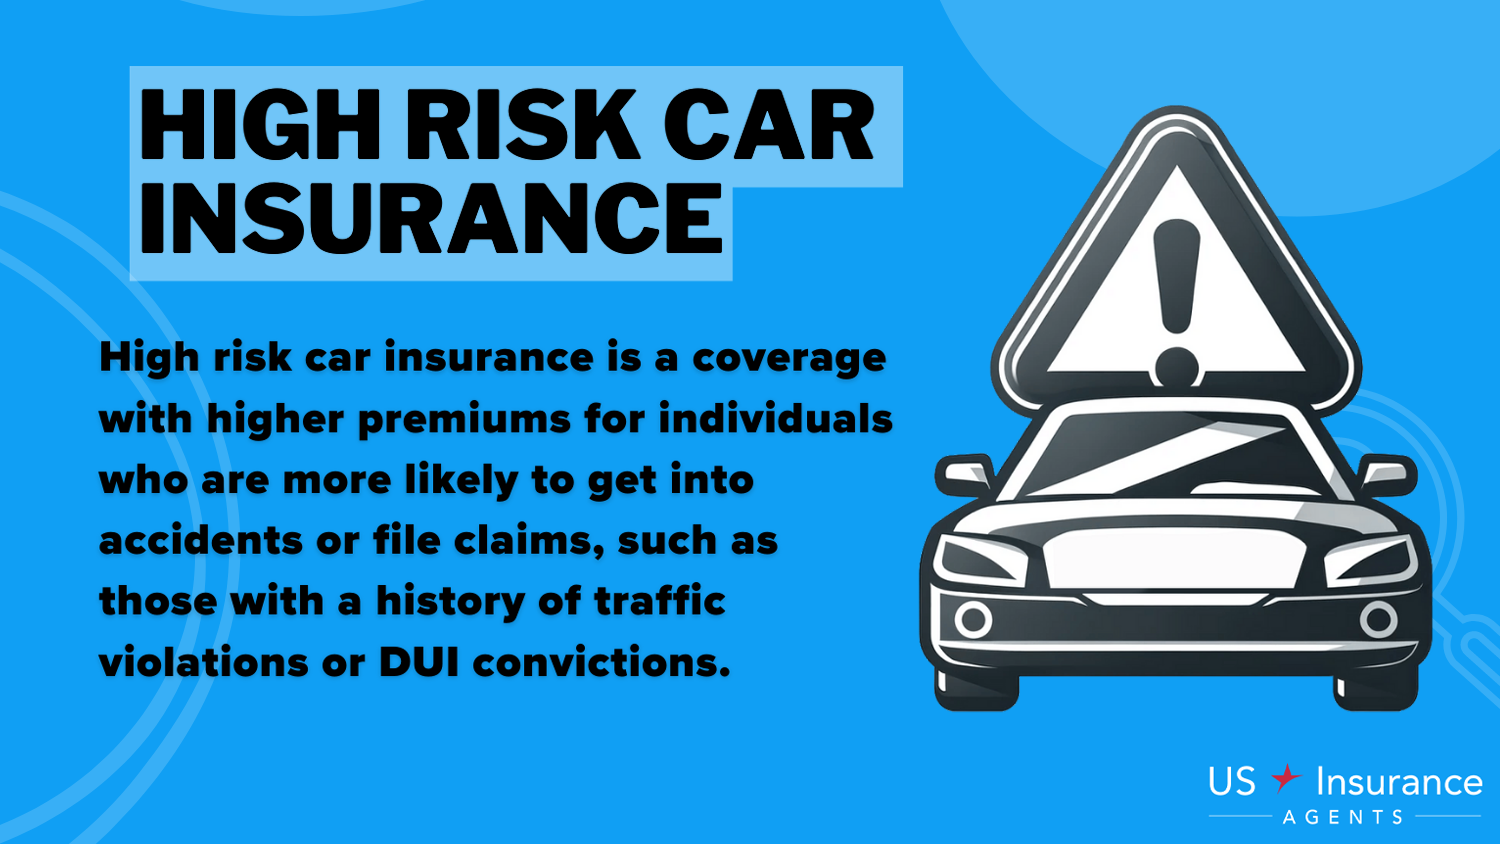 Cheap Volkswagen GTI Car Insurance: High Risk Car Insurance Definition Card